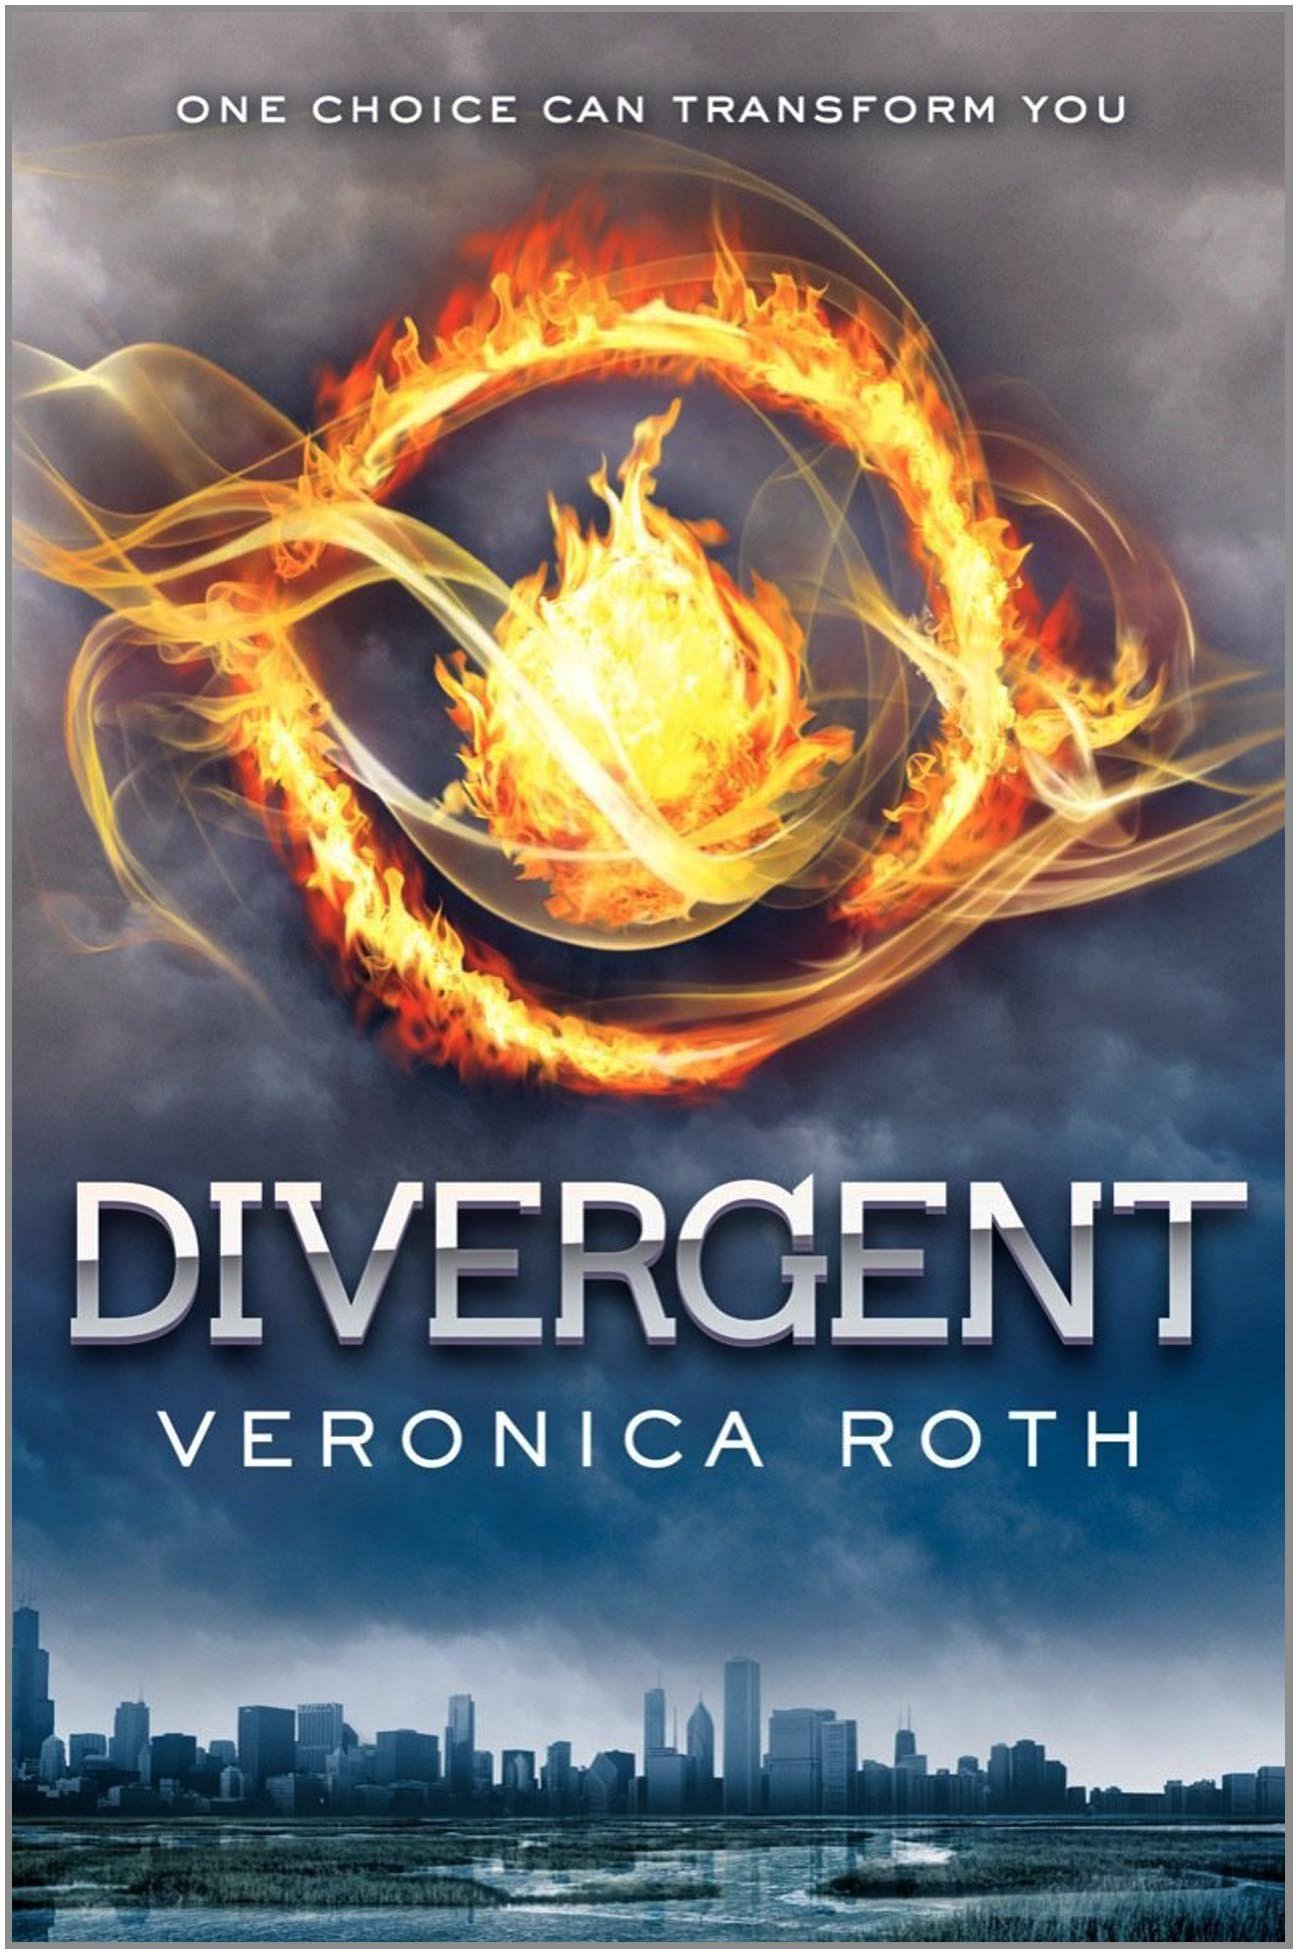 Image of "Divergent"